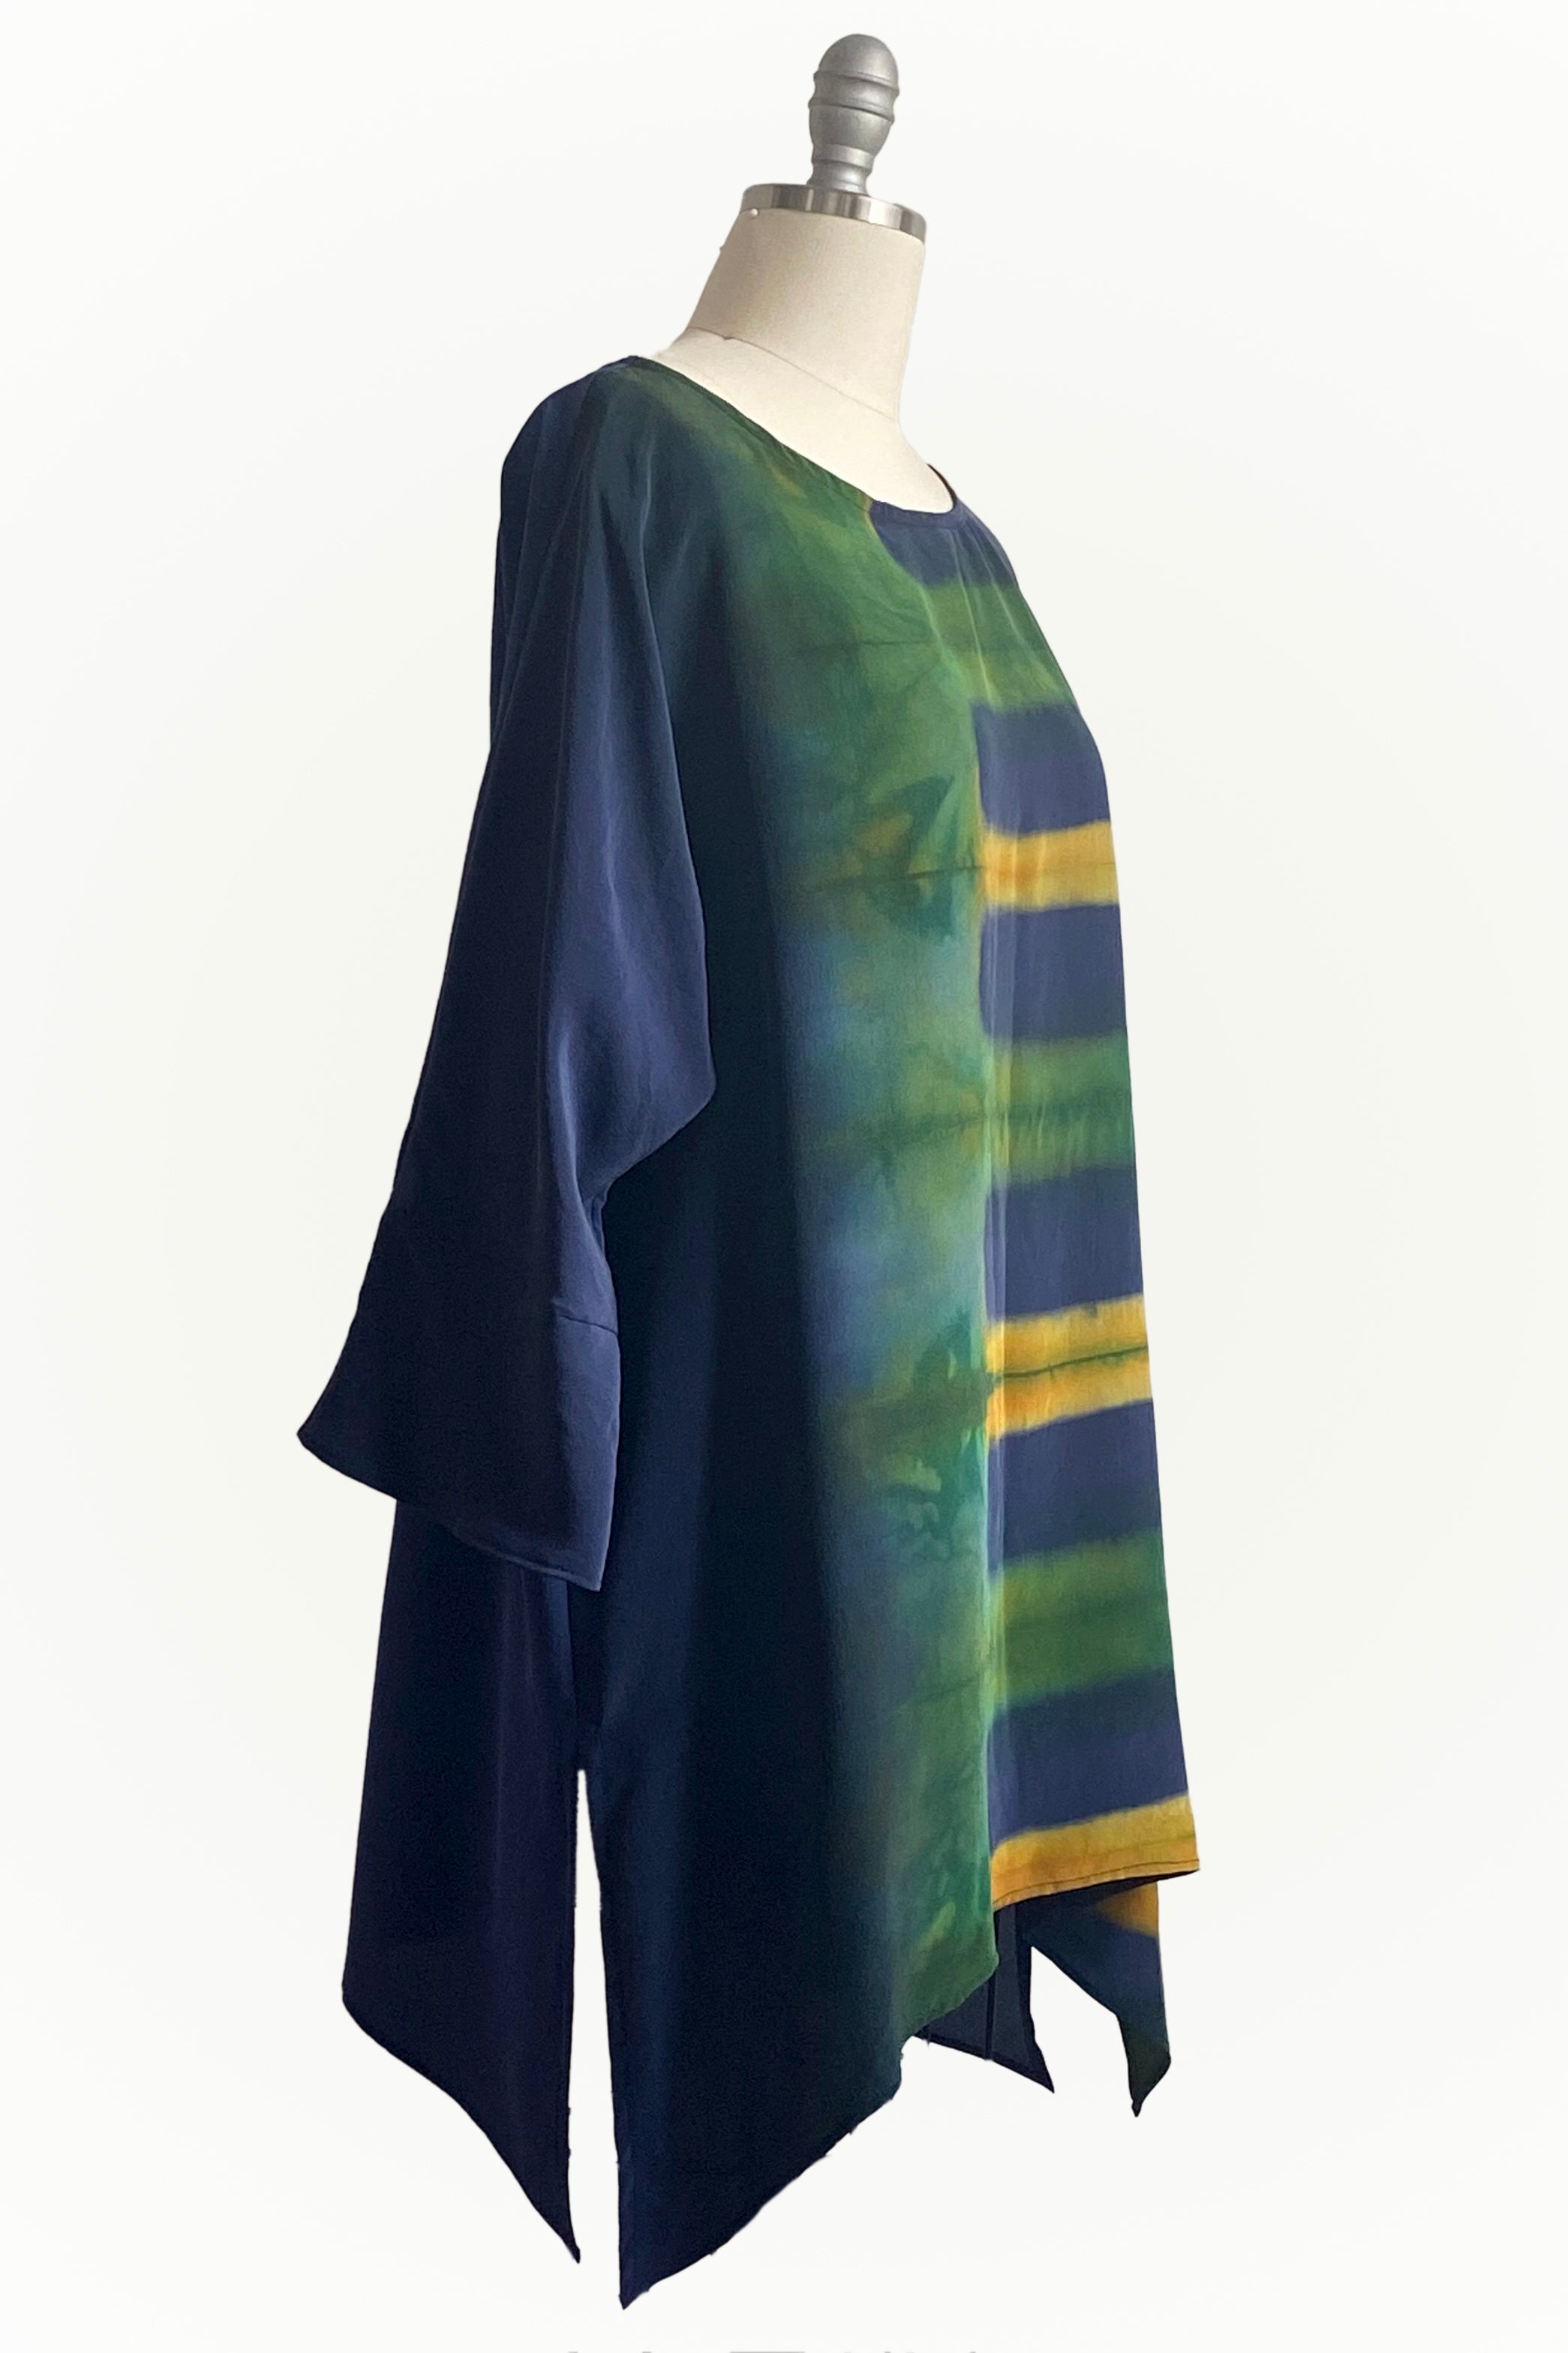 Greg's Tunic in Silk w/ Itajime Stick Dye - Navy w/ Green & Gold - Medium